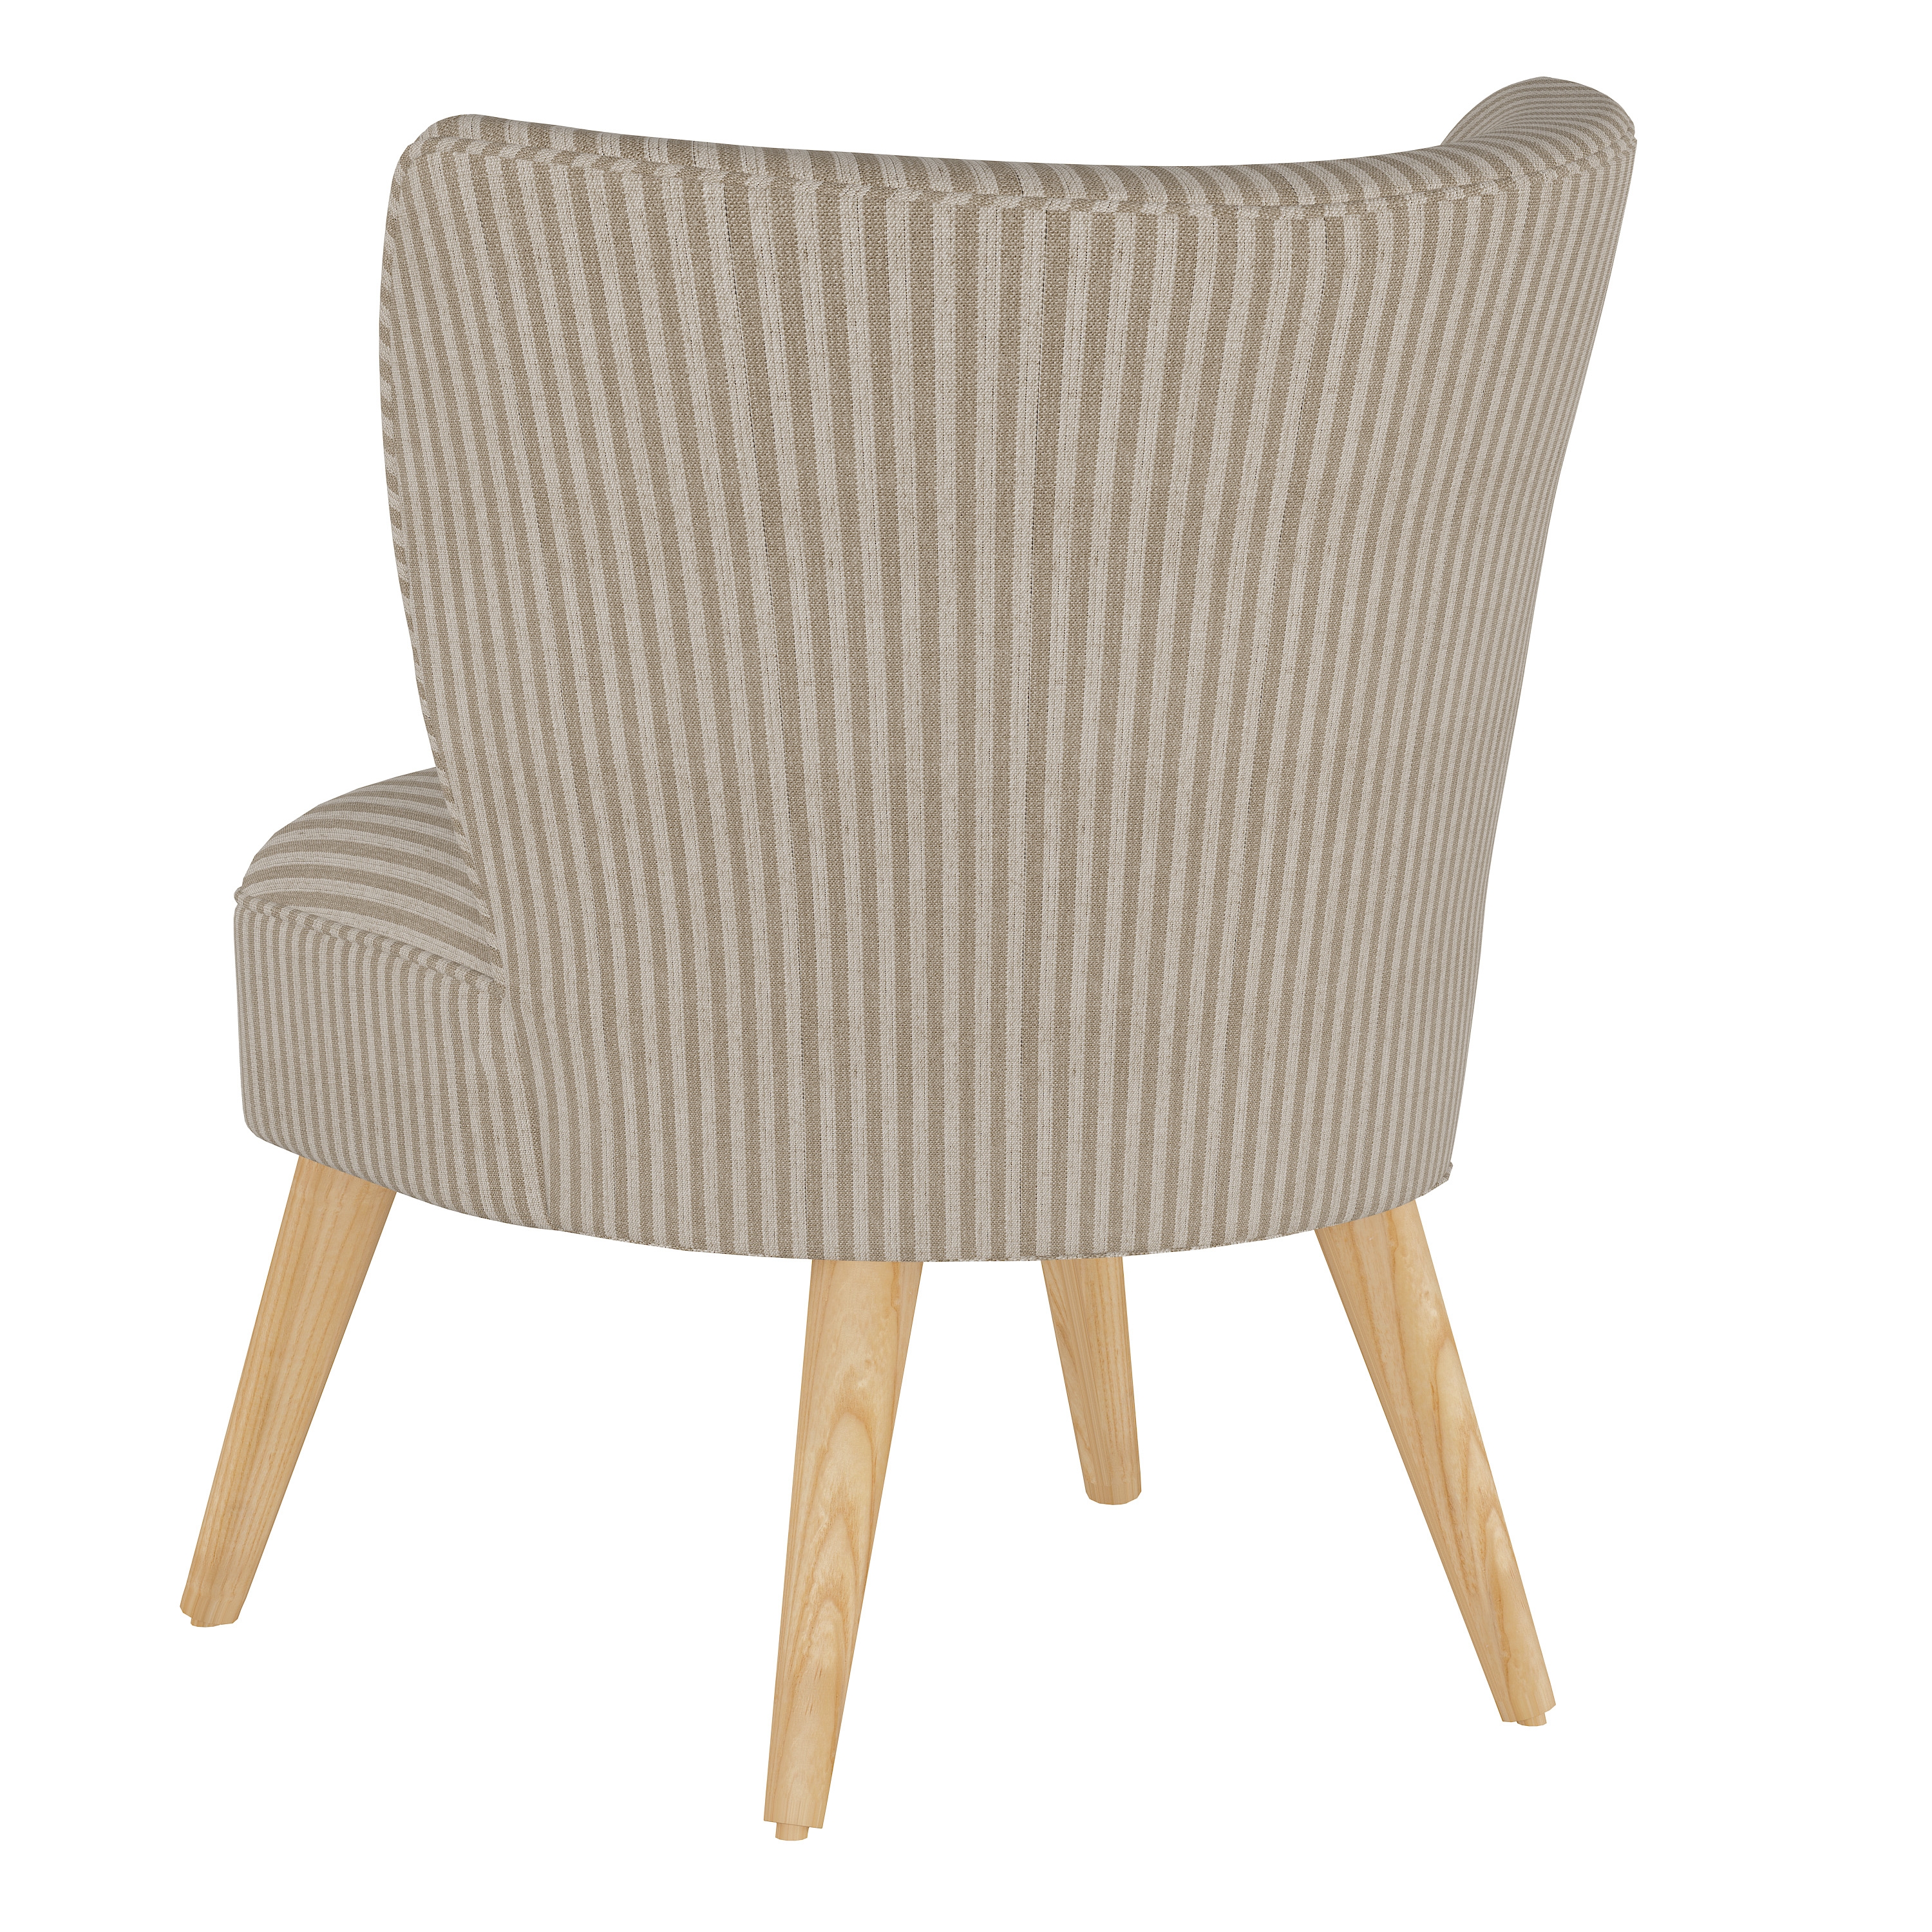 Altgeld Chair - Image 3